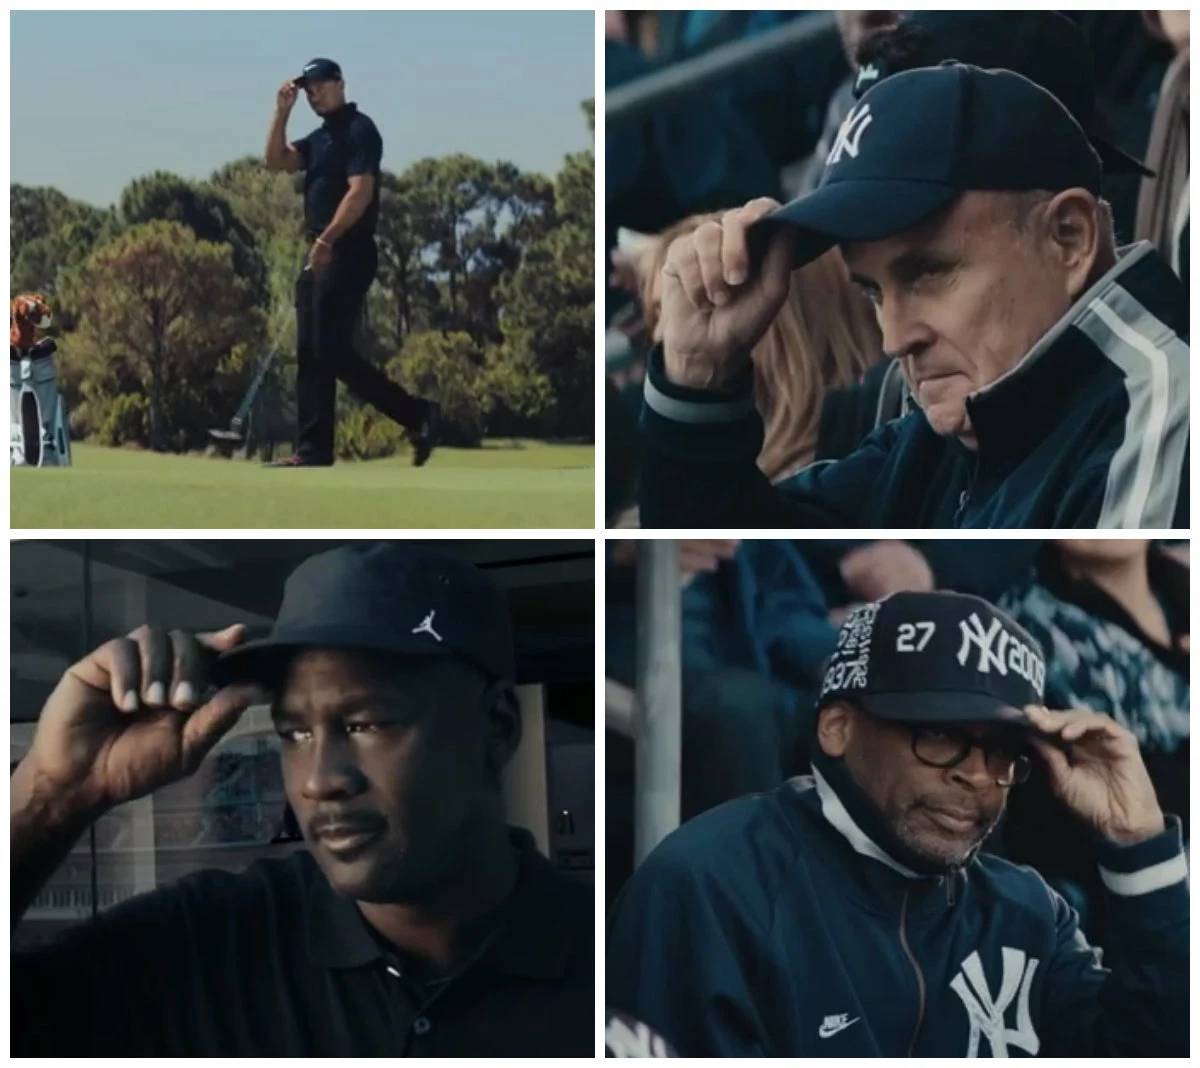 World Tips Hat To Derek Jeter in Nike Ad